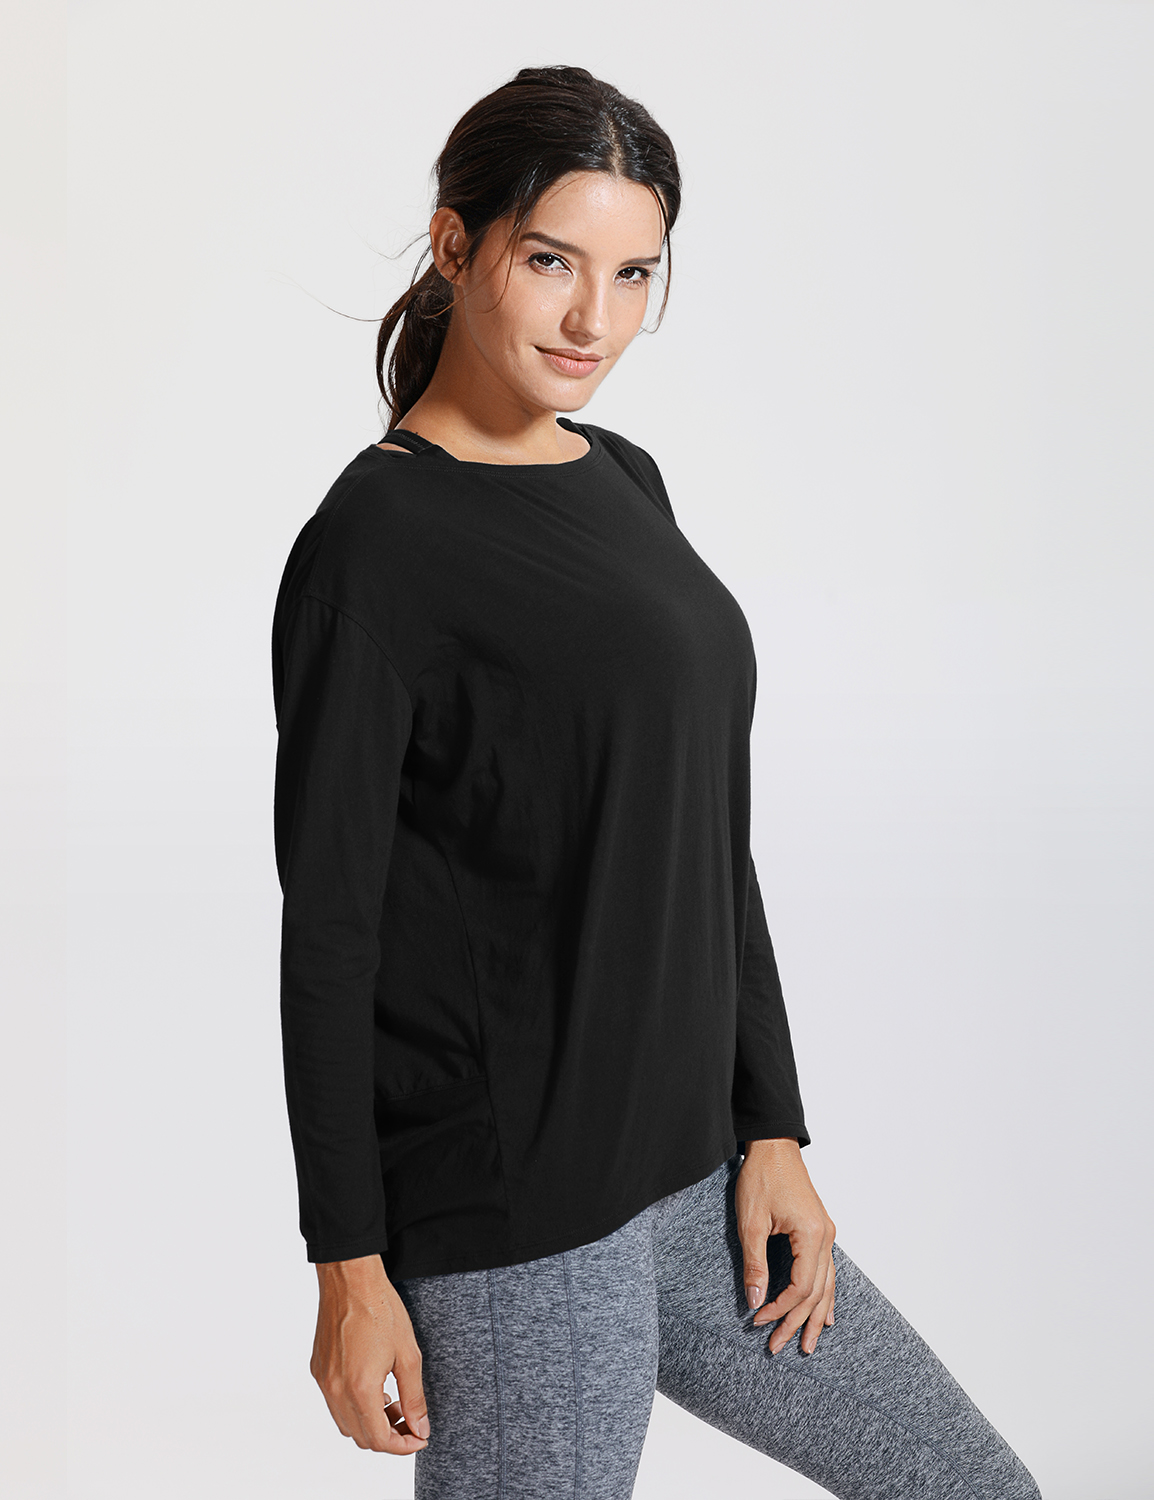 Crz Yoga Women Long Sleeve Workout Shirts Loose Fit Pima Cotton Yoga Shirts Tops Ebay